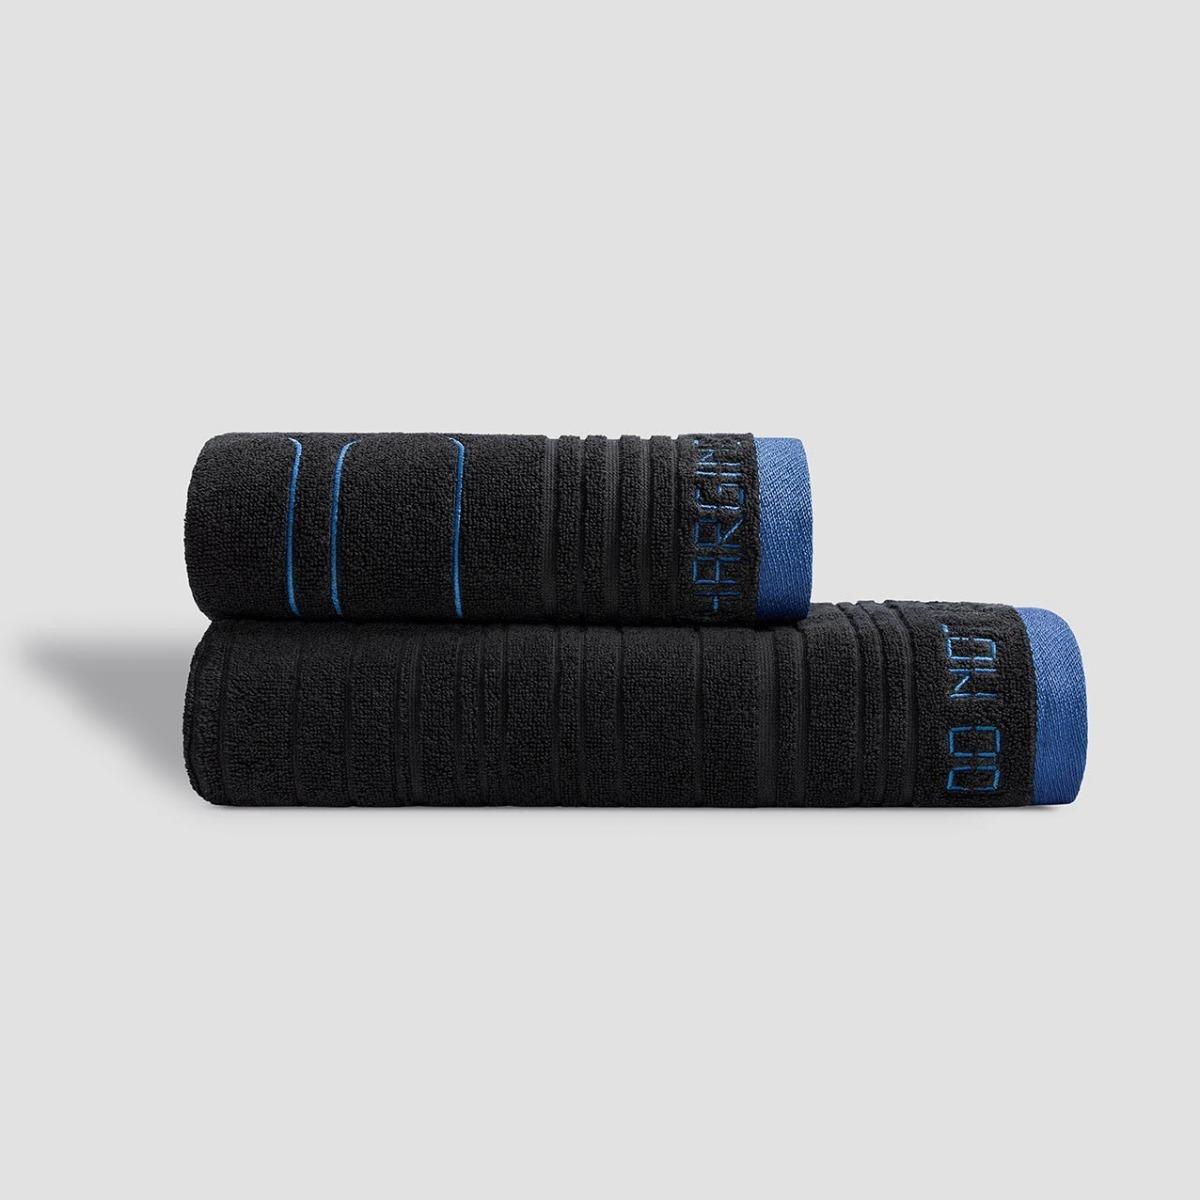 Полотенце Togas Макс чёрное с синим 50х100 см полотенце togas аркадия нежный коралл 50х100